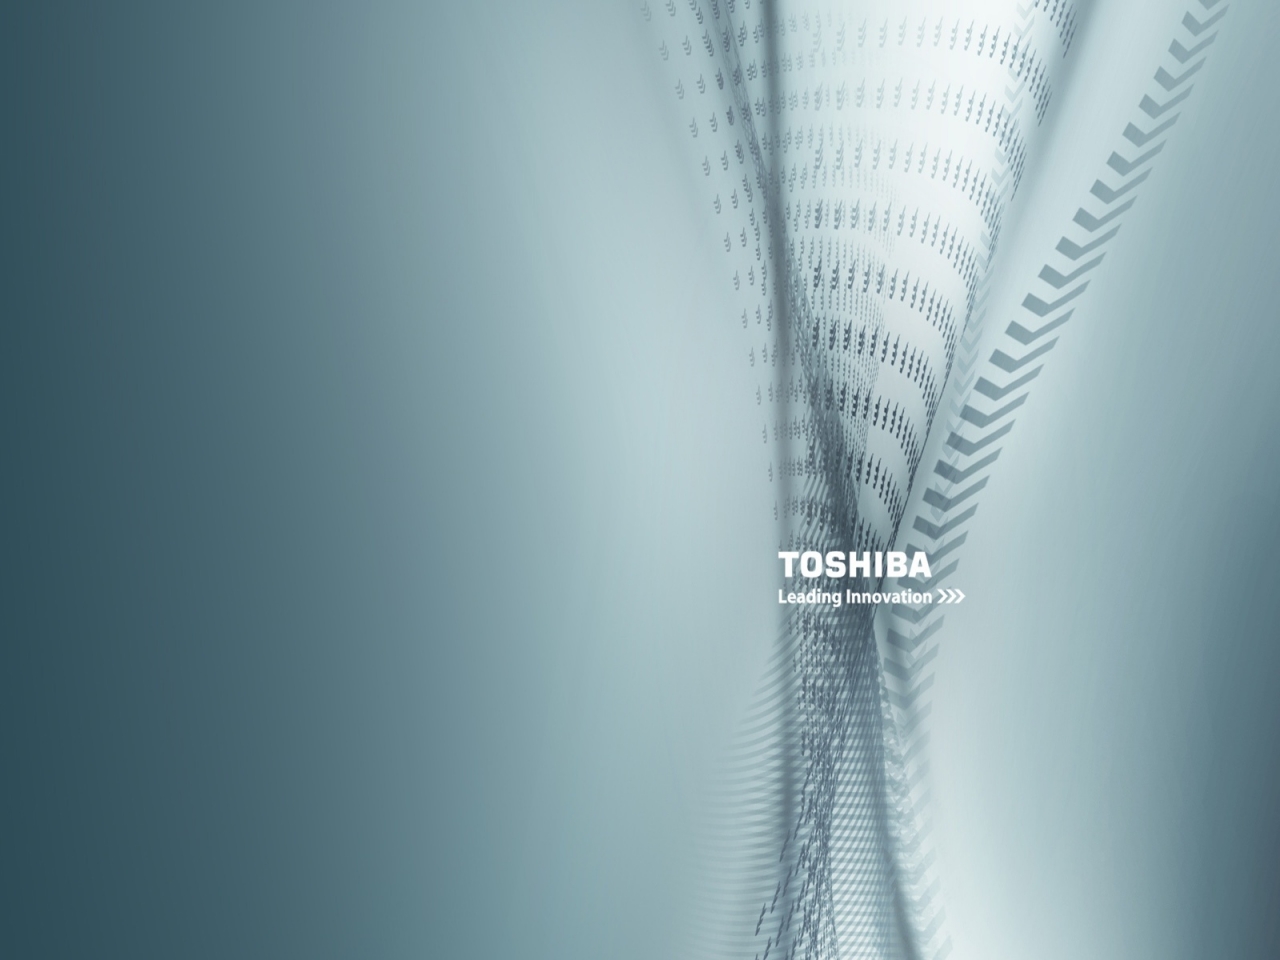 Toshiba Innovation for 1280 x 960 resolution